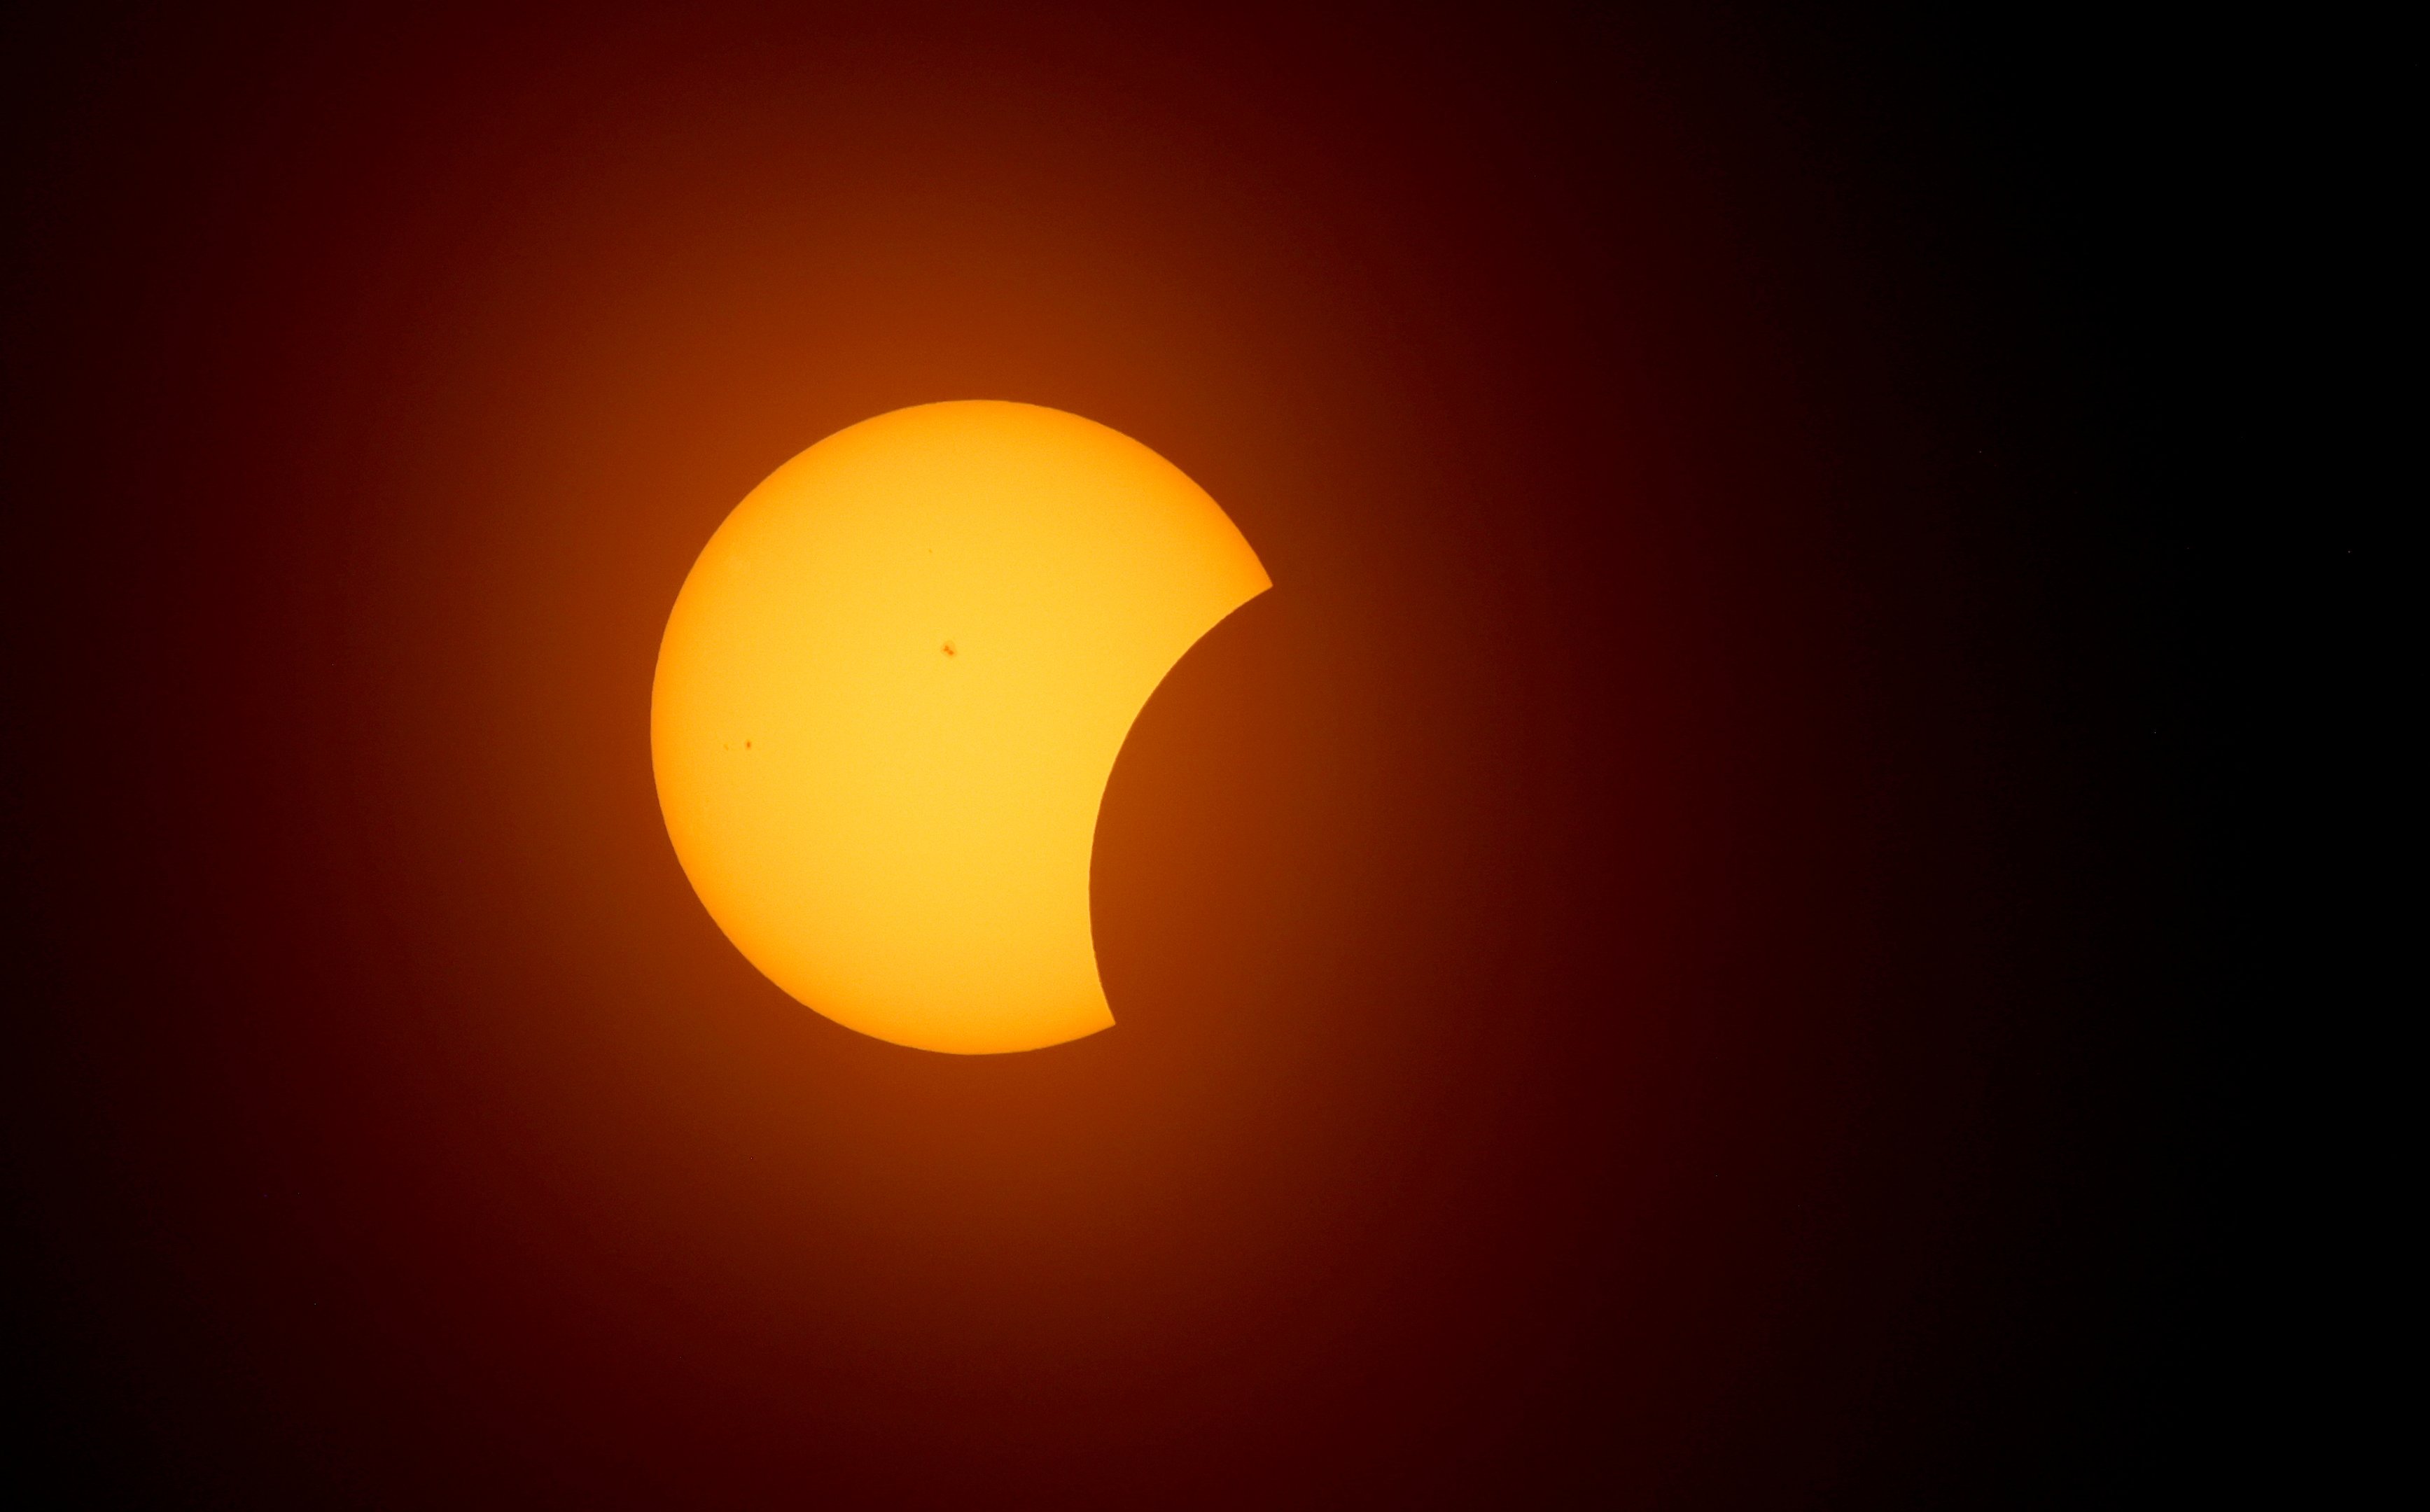 Eclipse solar: sol encoberto pela lua em Forth Worth, Dallas, nesta segunda, 8 de abril 